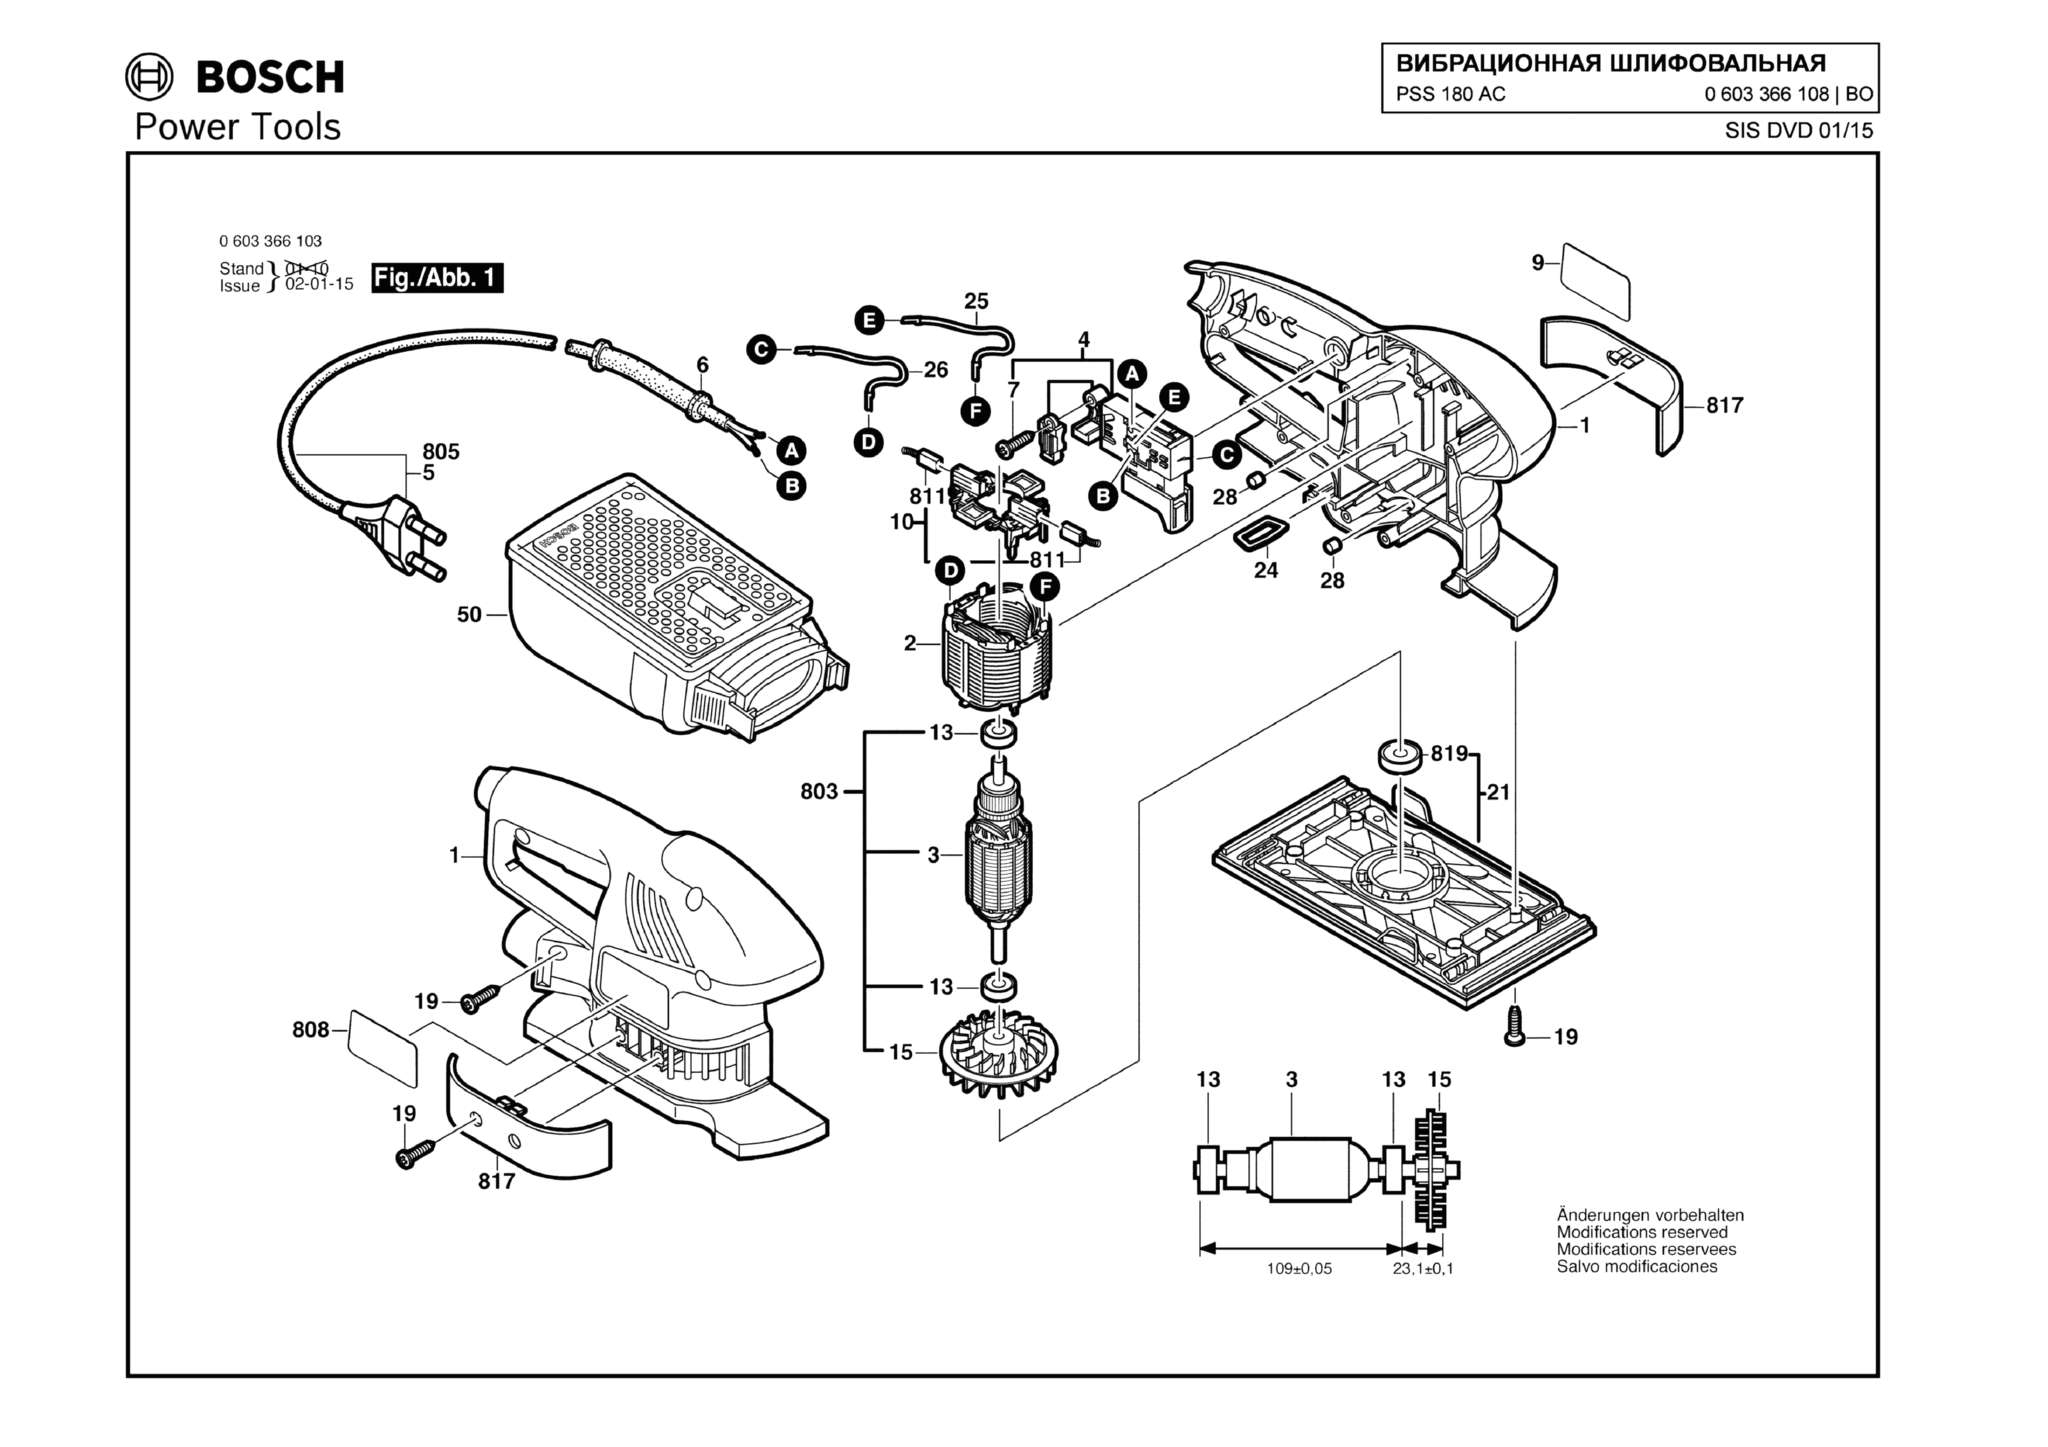 Запчасти, схема и деталировка Bosch PSS 180 AC (ТИП 0603366108)